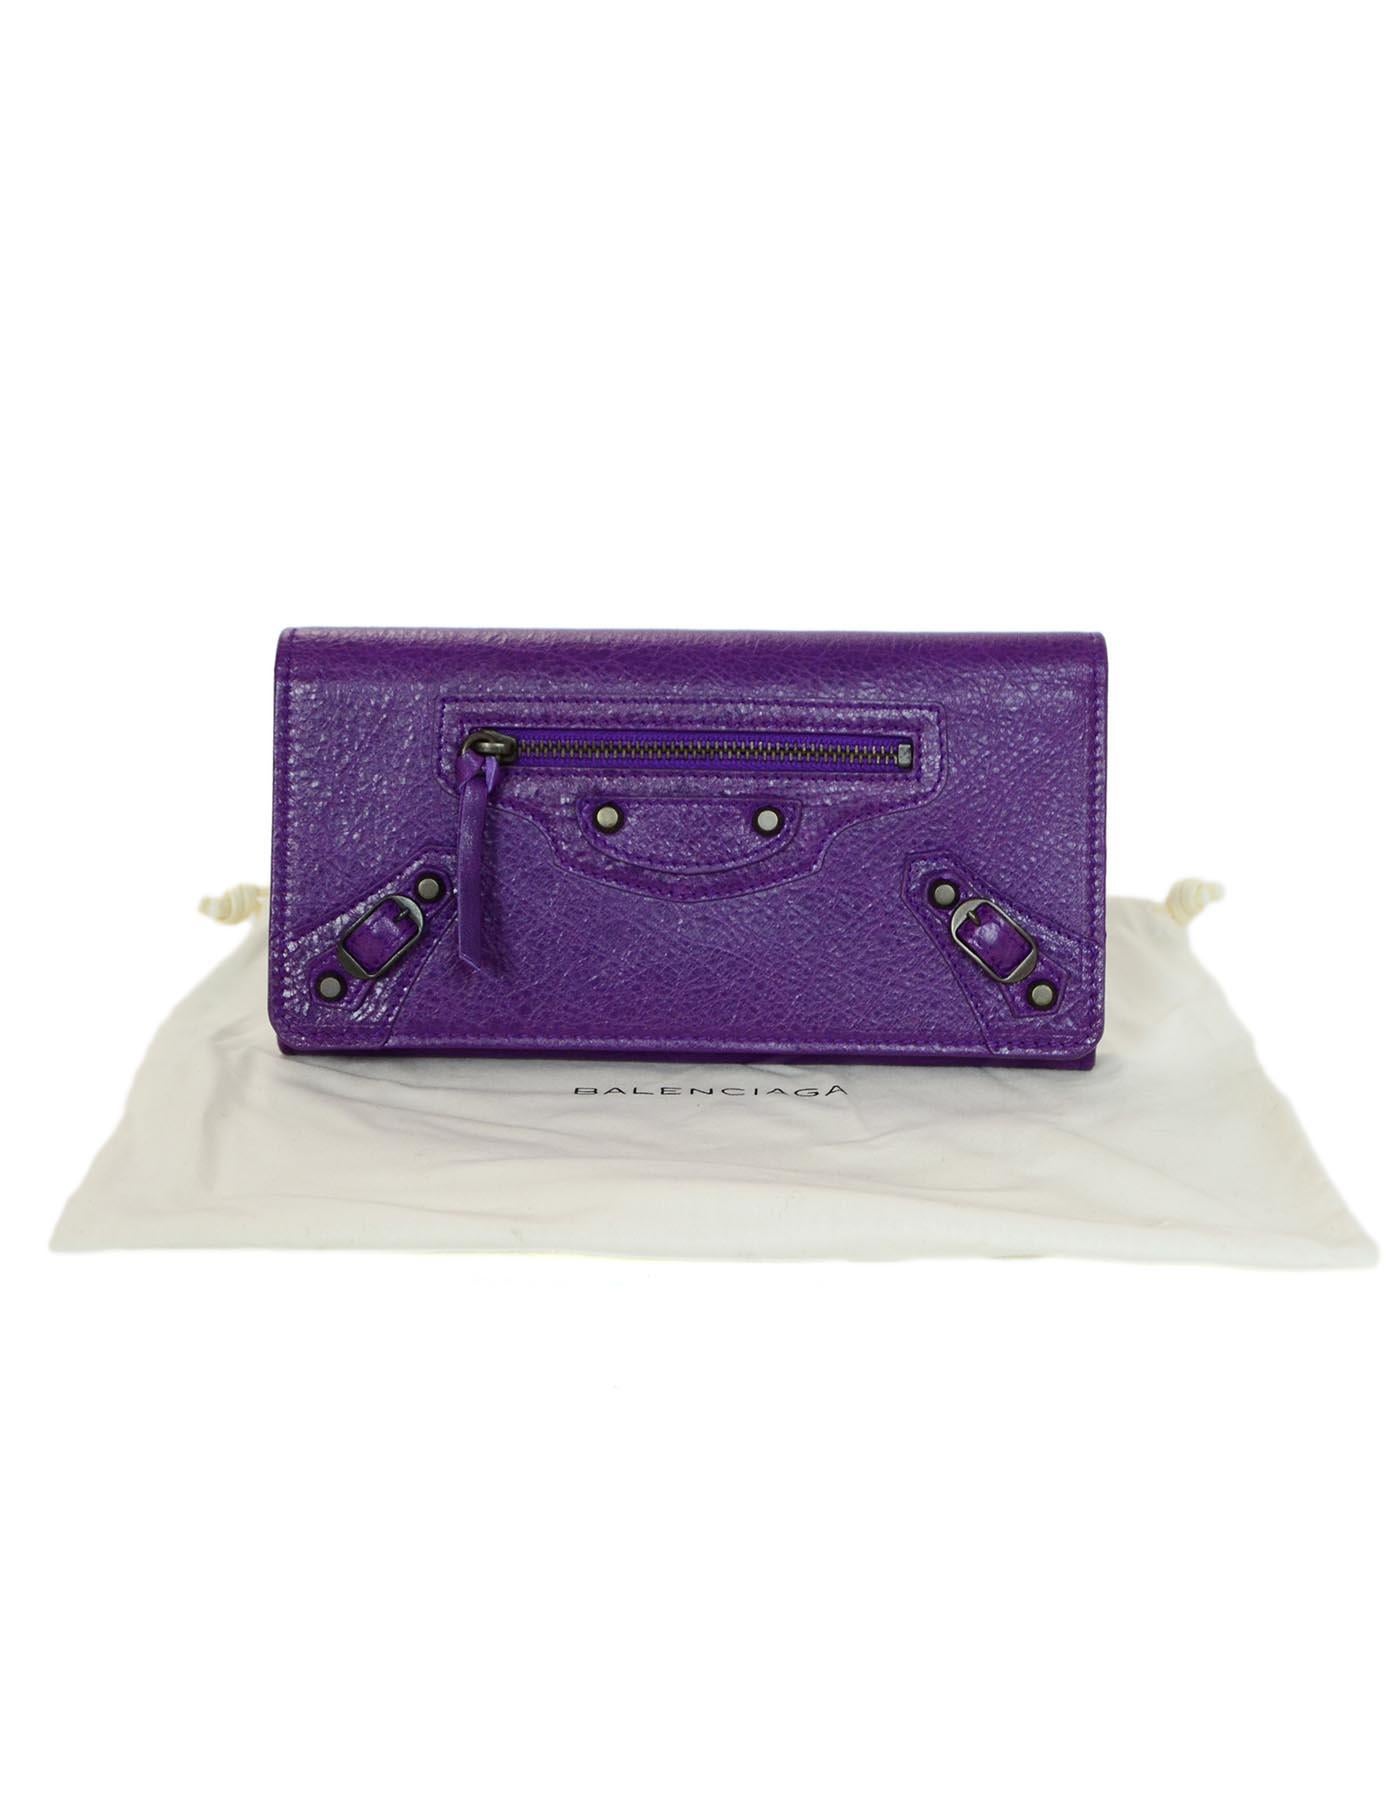 Balenciaga Purple Leather Classic Wallet W/ Brass Hardware & Dust Bag 4